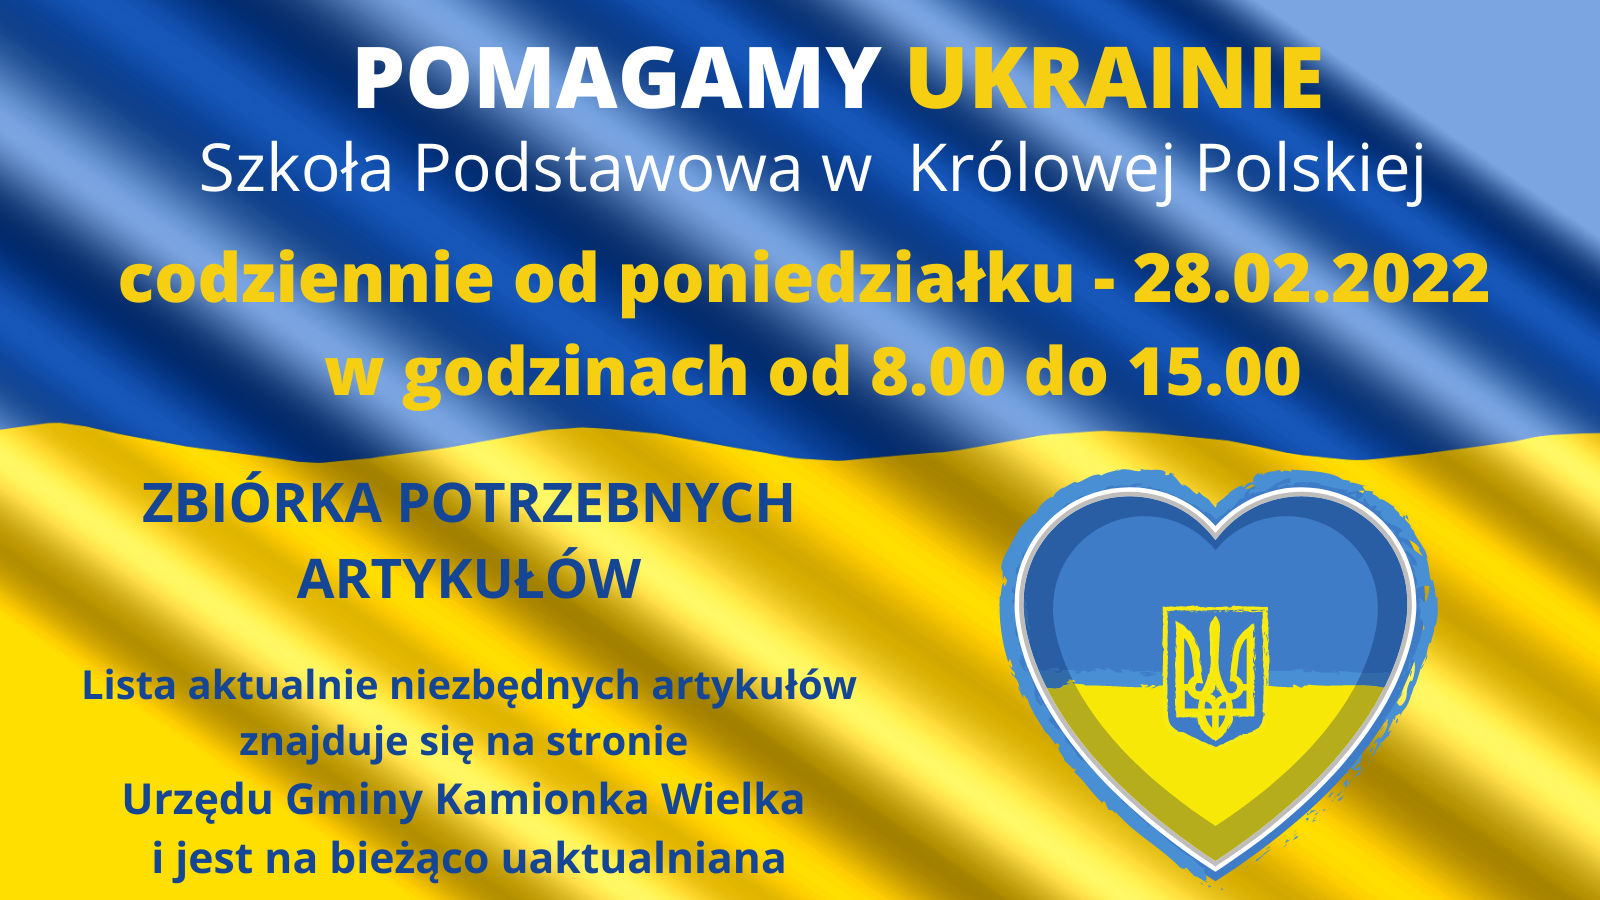 POMAGAMY UKRAINIE !!